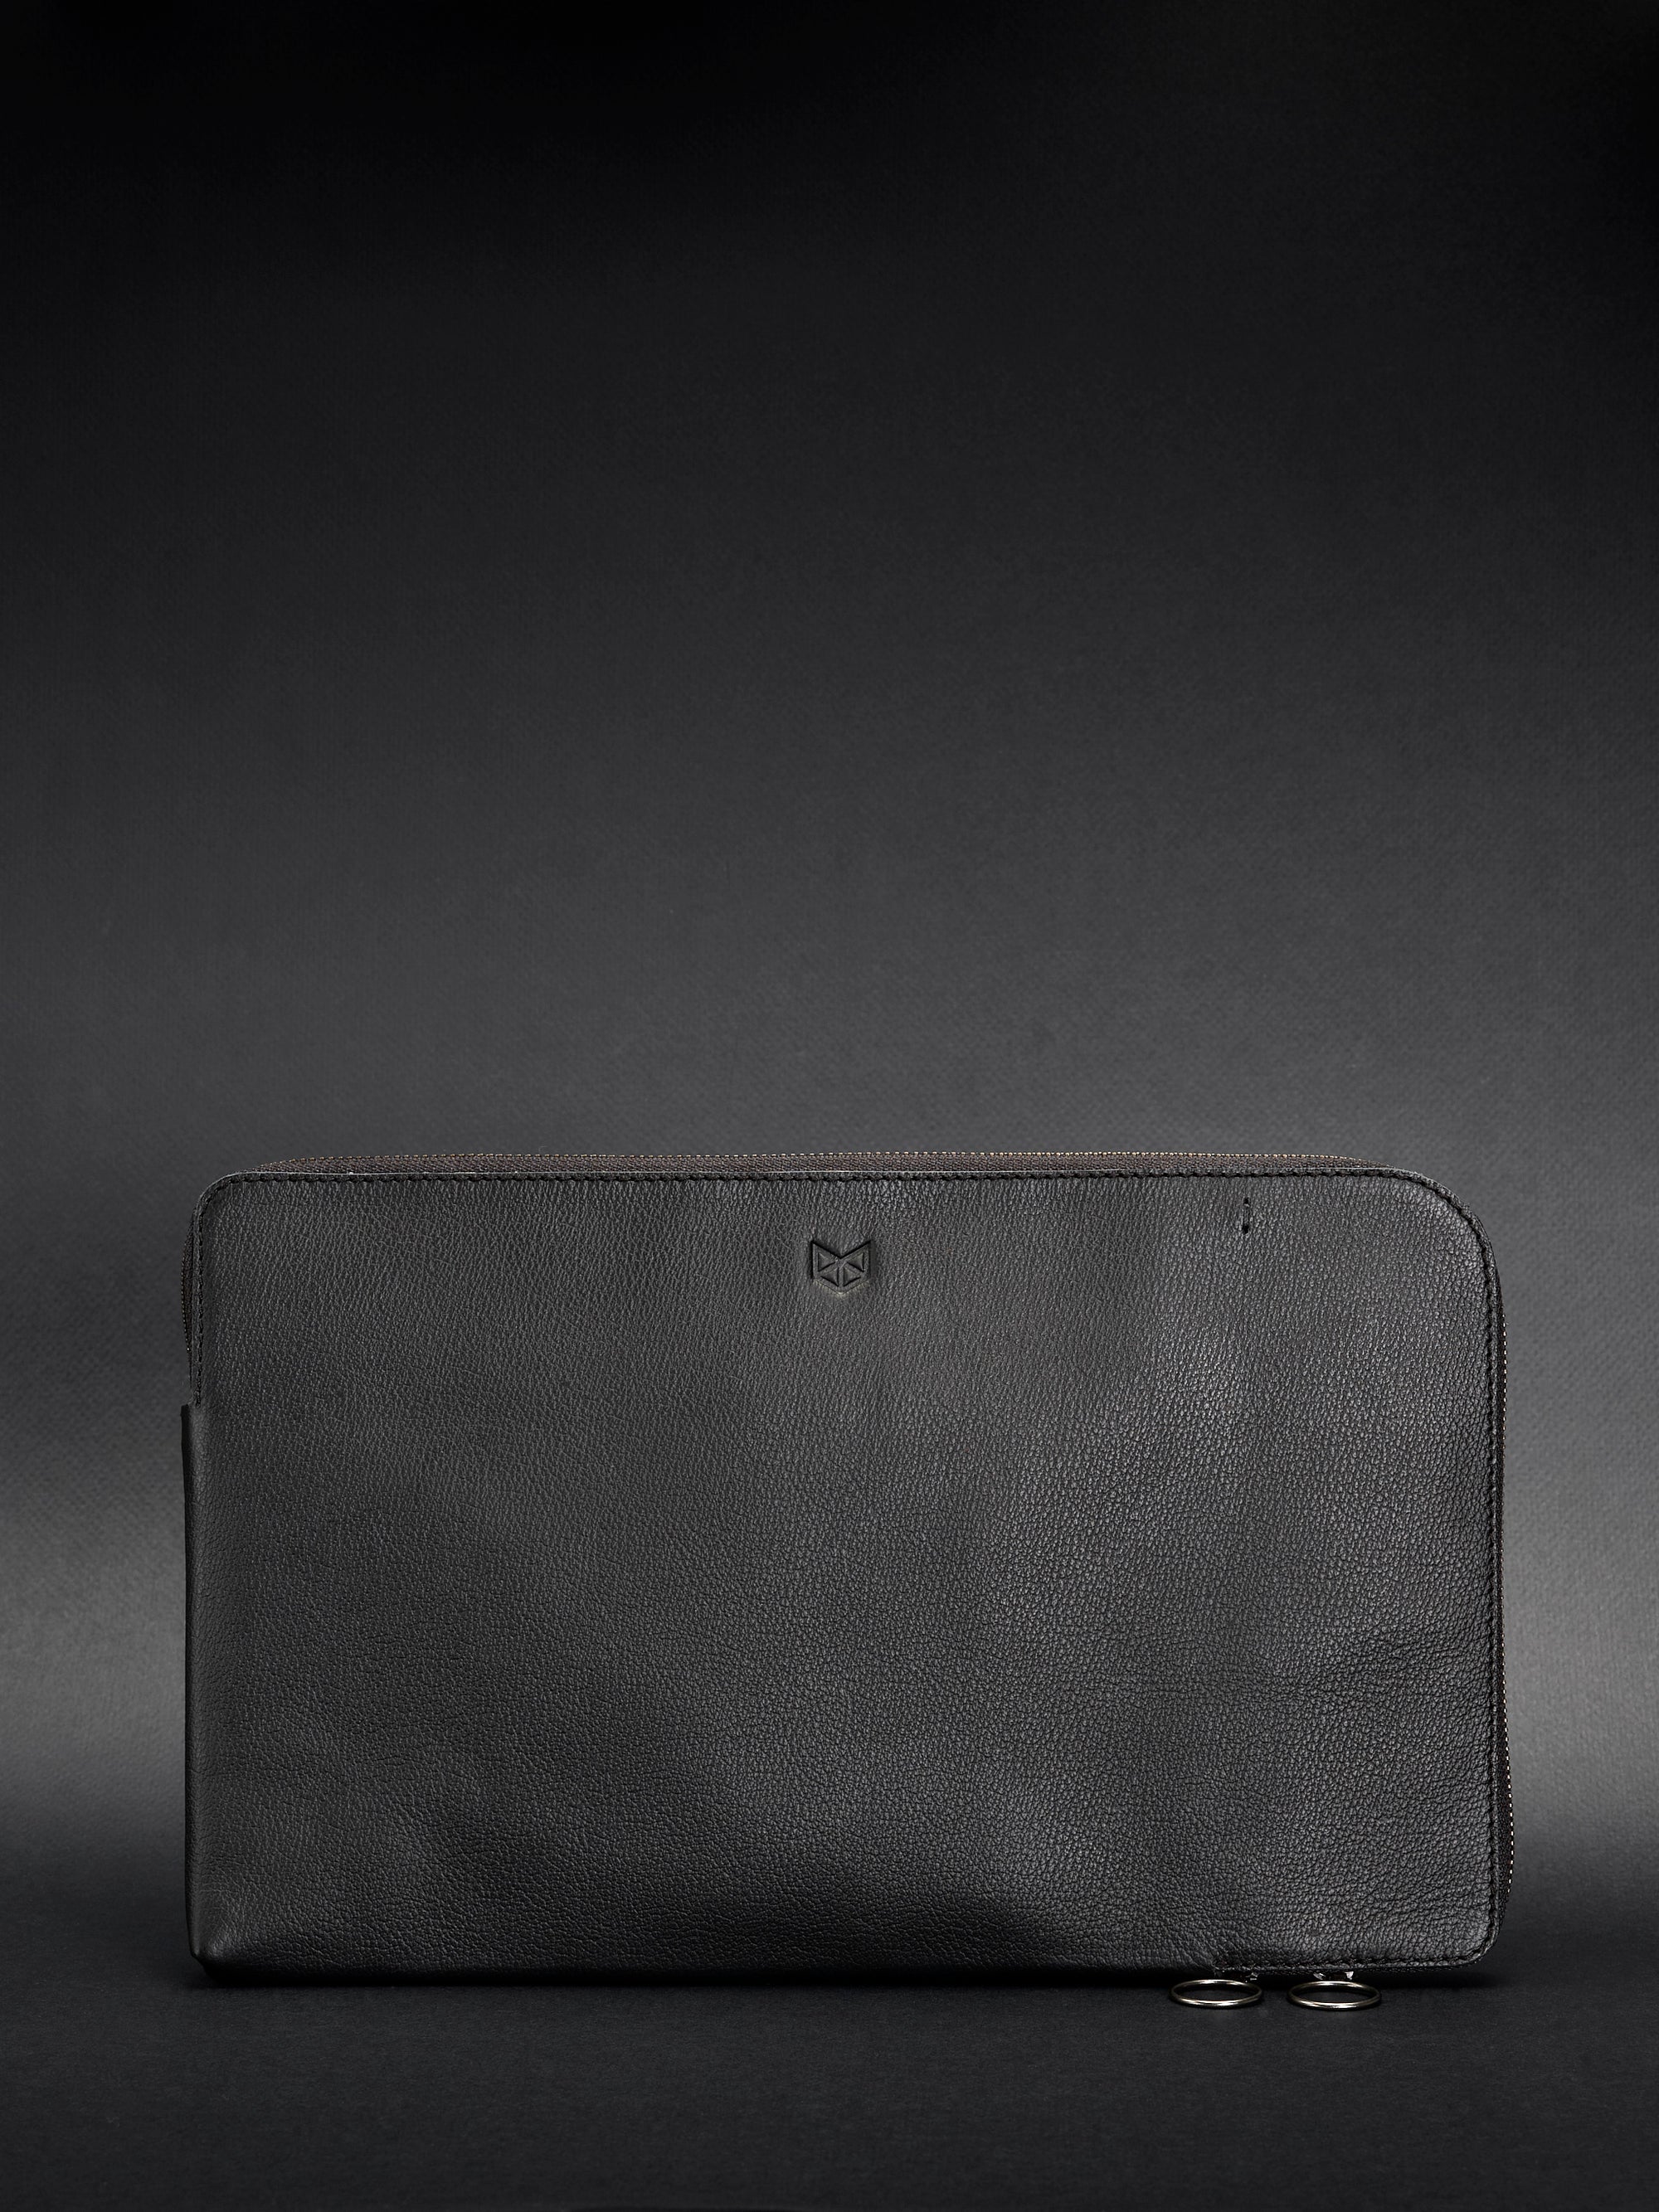 Linen interior. Draftsman 6 iPad Case Black, iPad Pro 11-inch, iPad Pro 12.9-inch, M1 Chip by Capra Leather